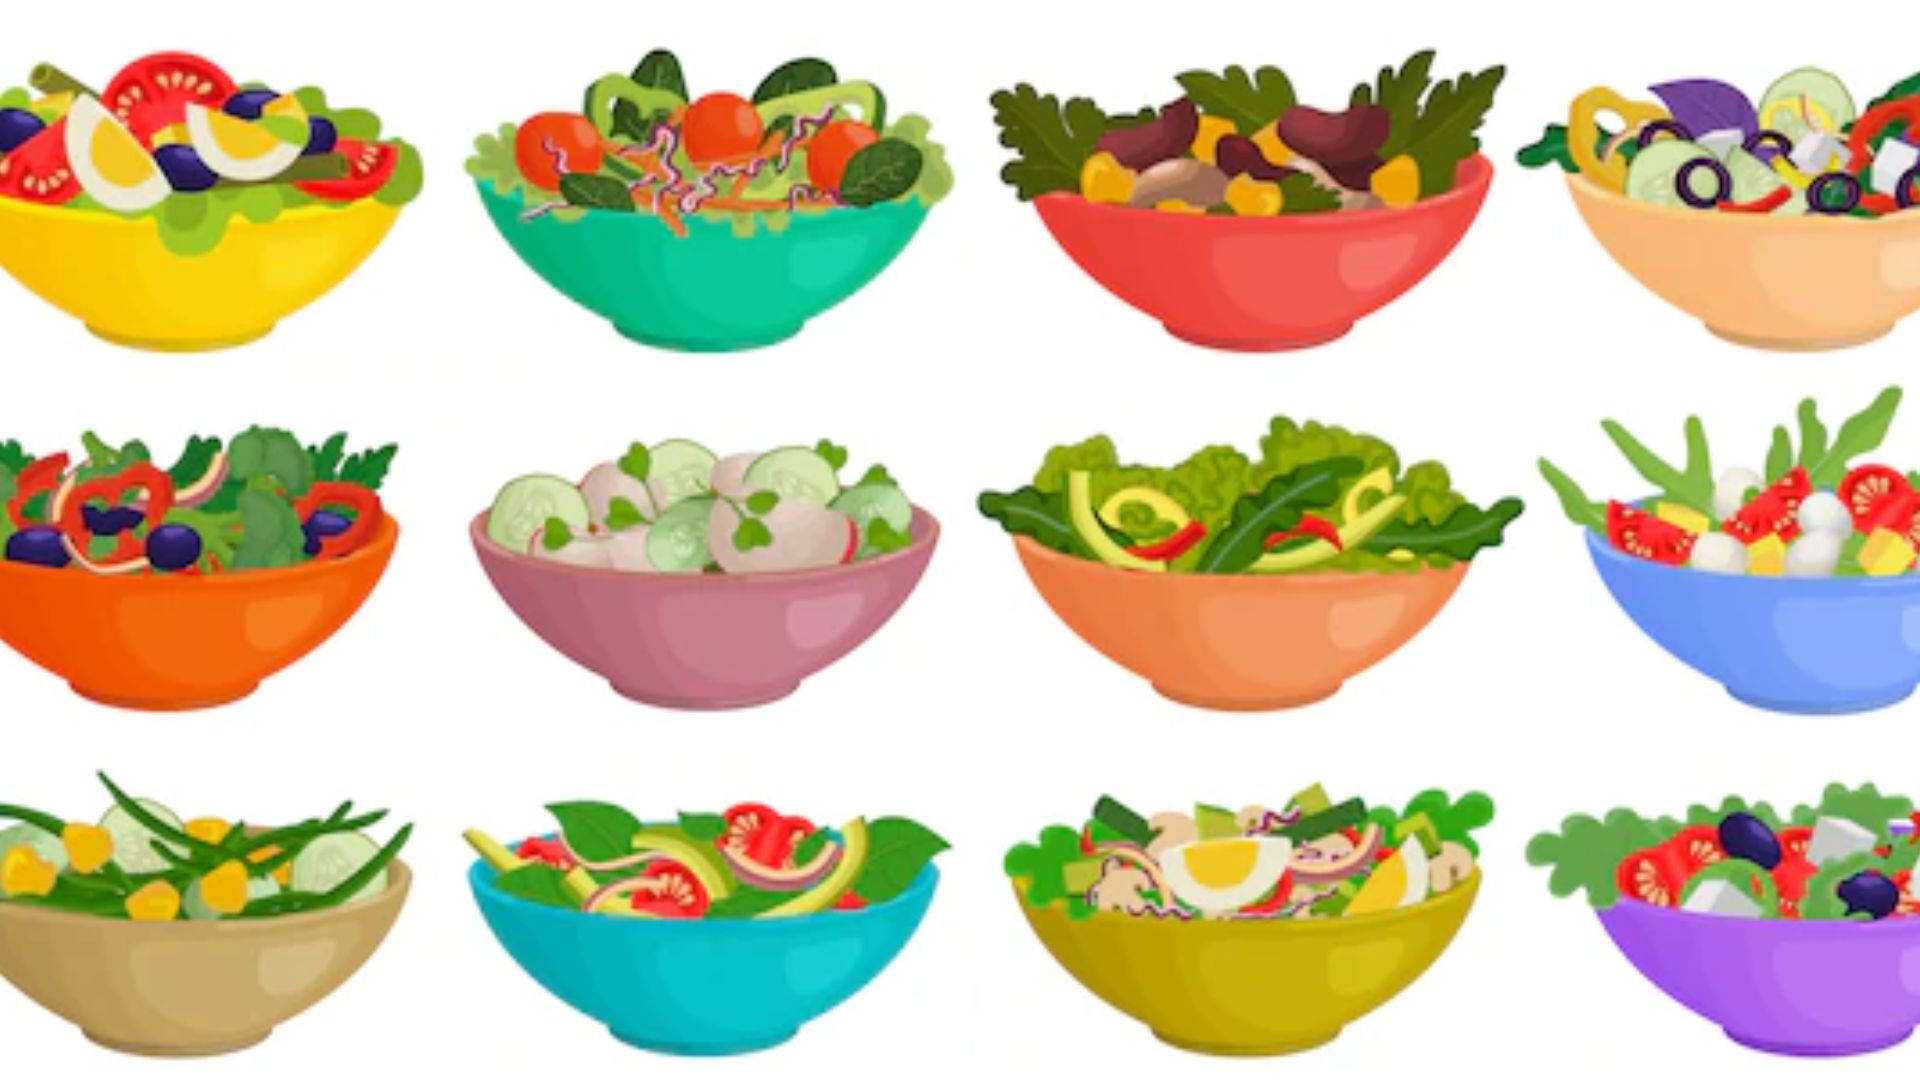 Salad Bowls Graphic Art Background